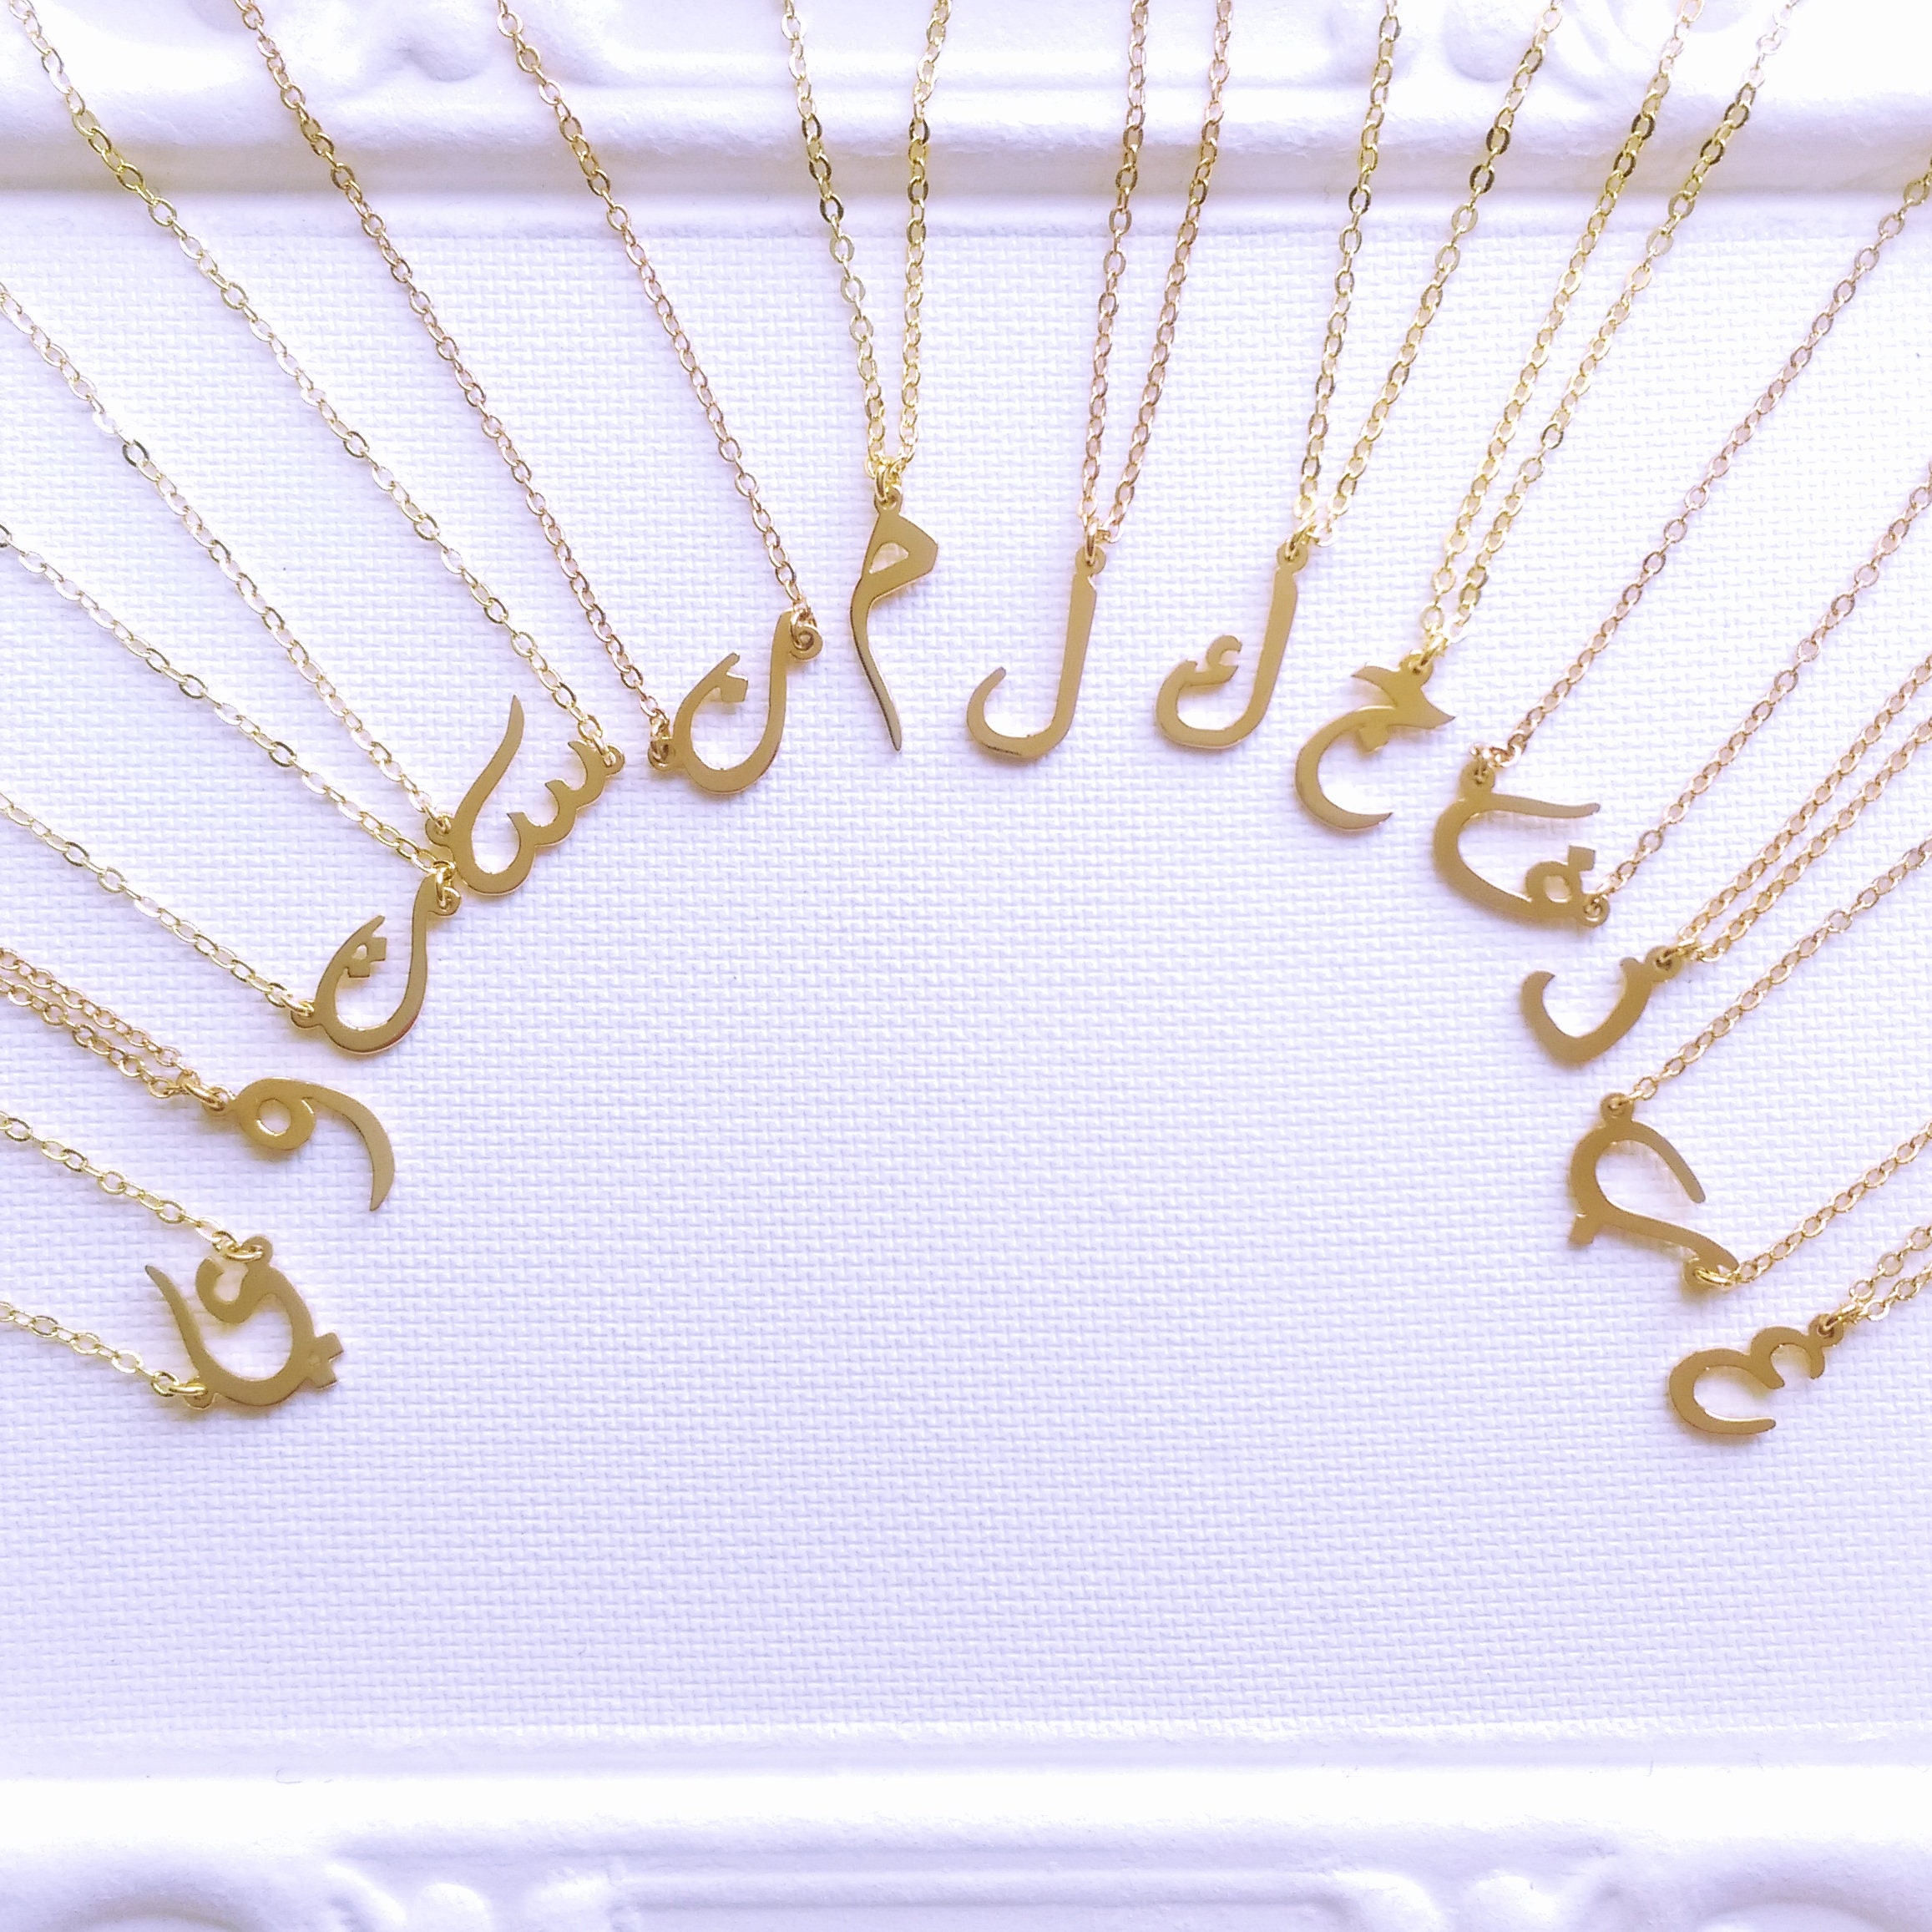 Arabic Writing Necklace - Personalized Arabic Name Pendant